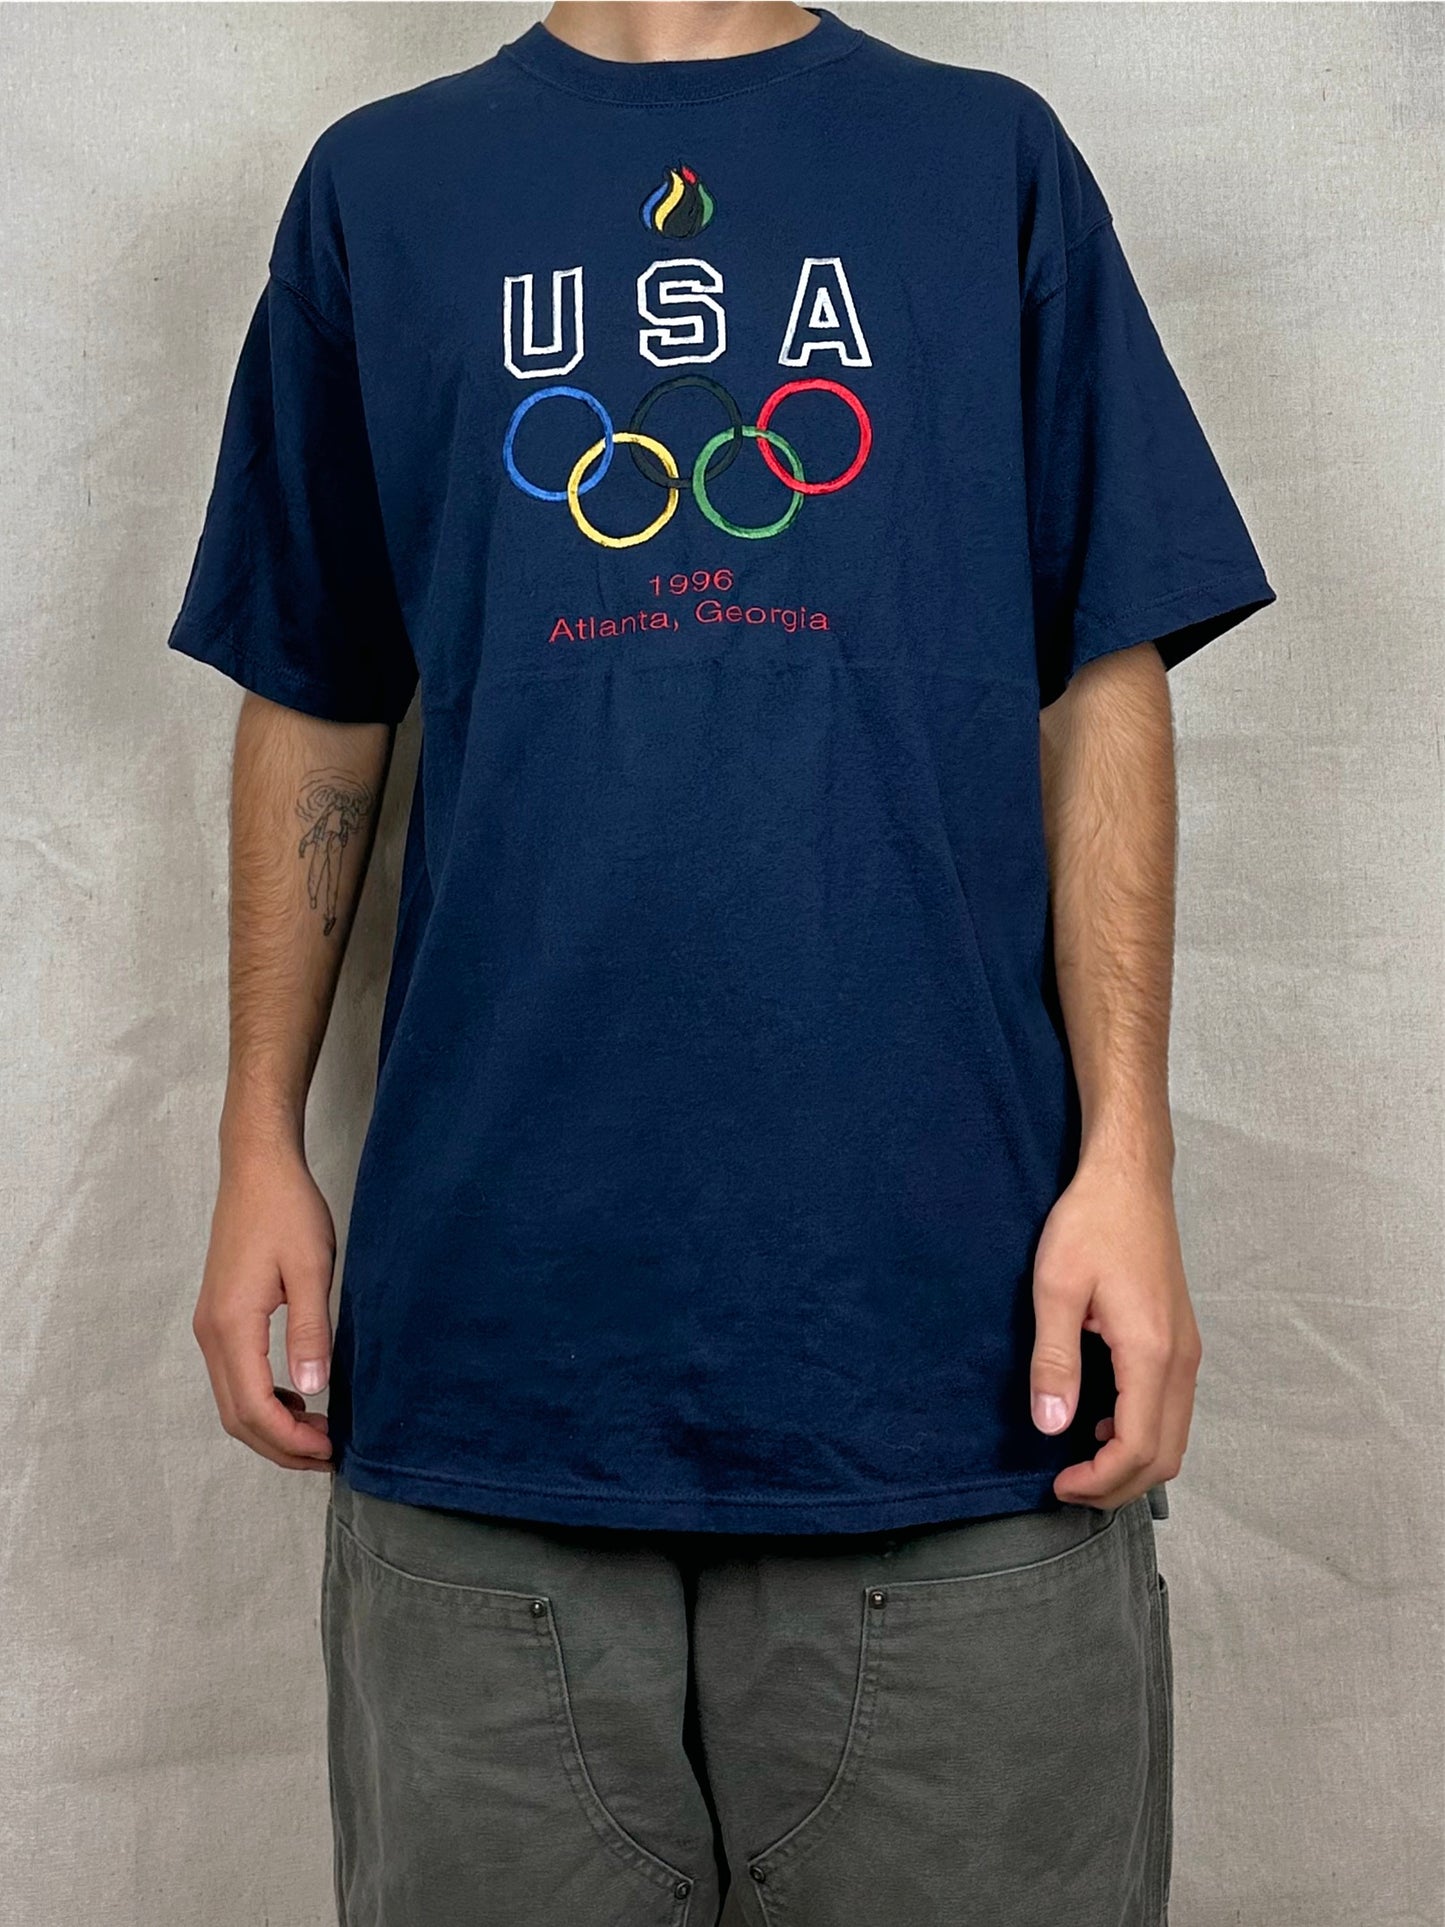 1996 Atlanta Olympics Embroidered USA Made Vintage T-Shirt Size XL